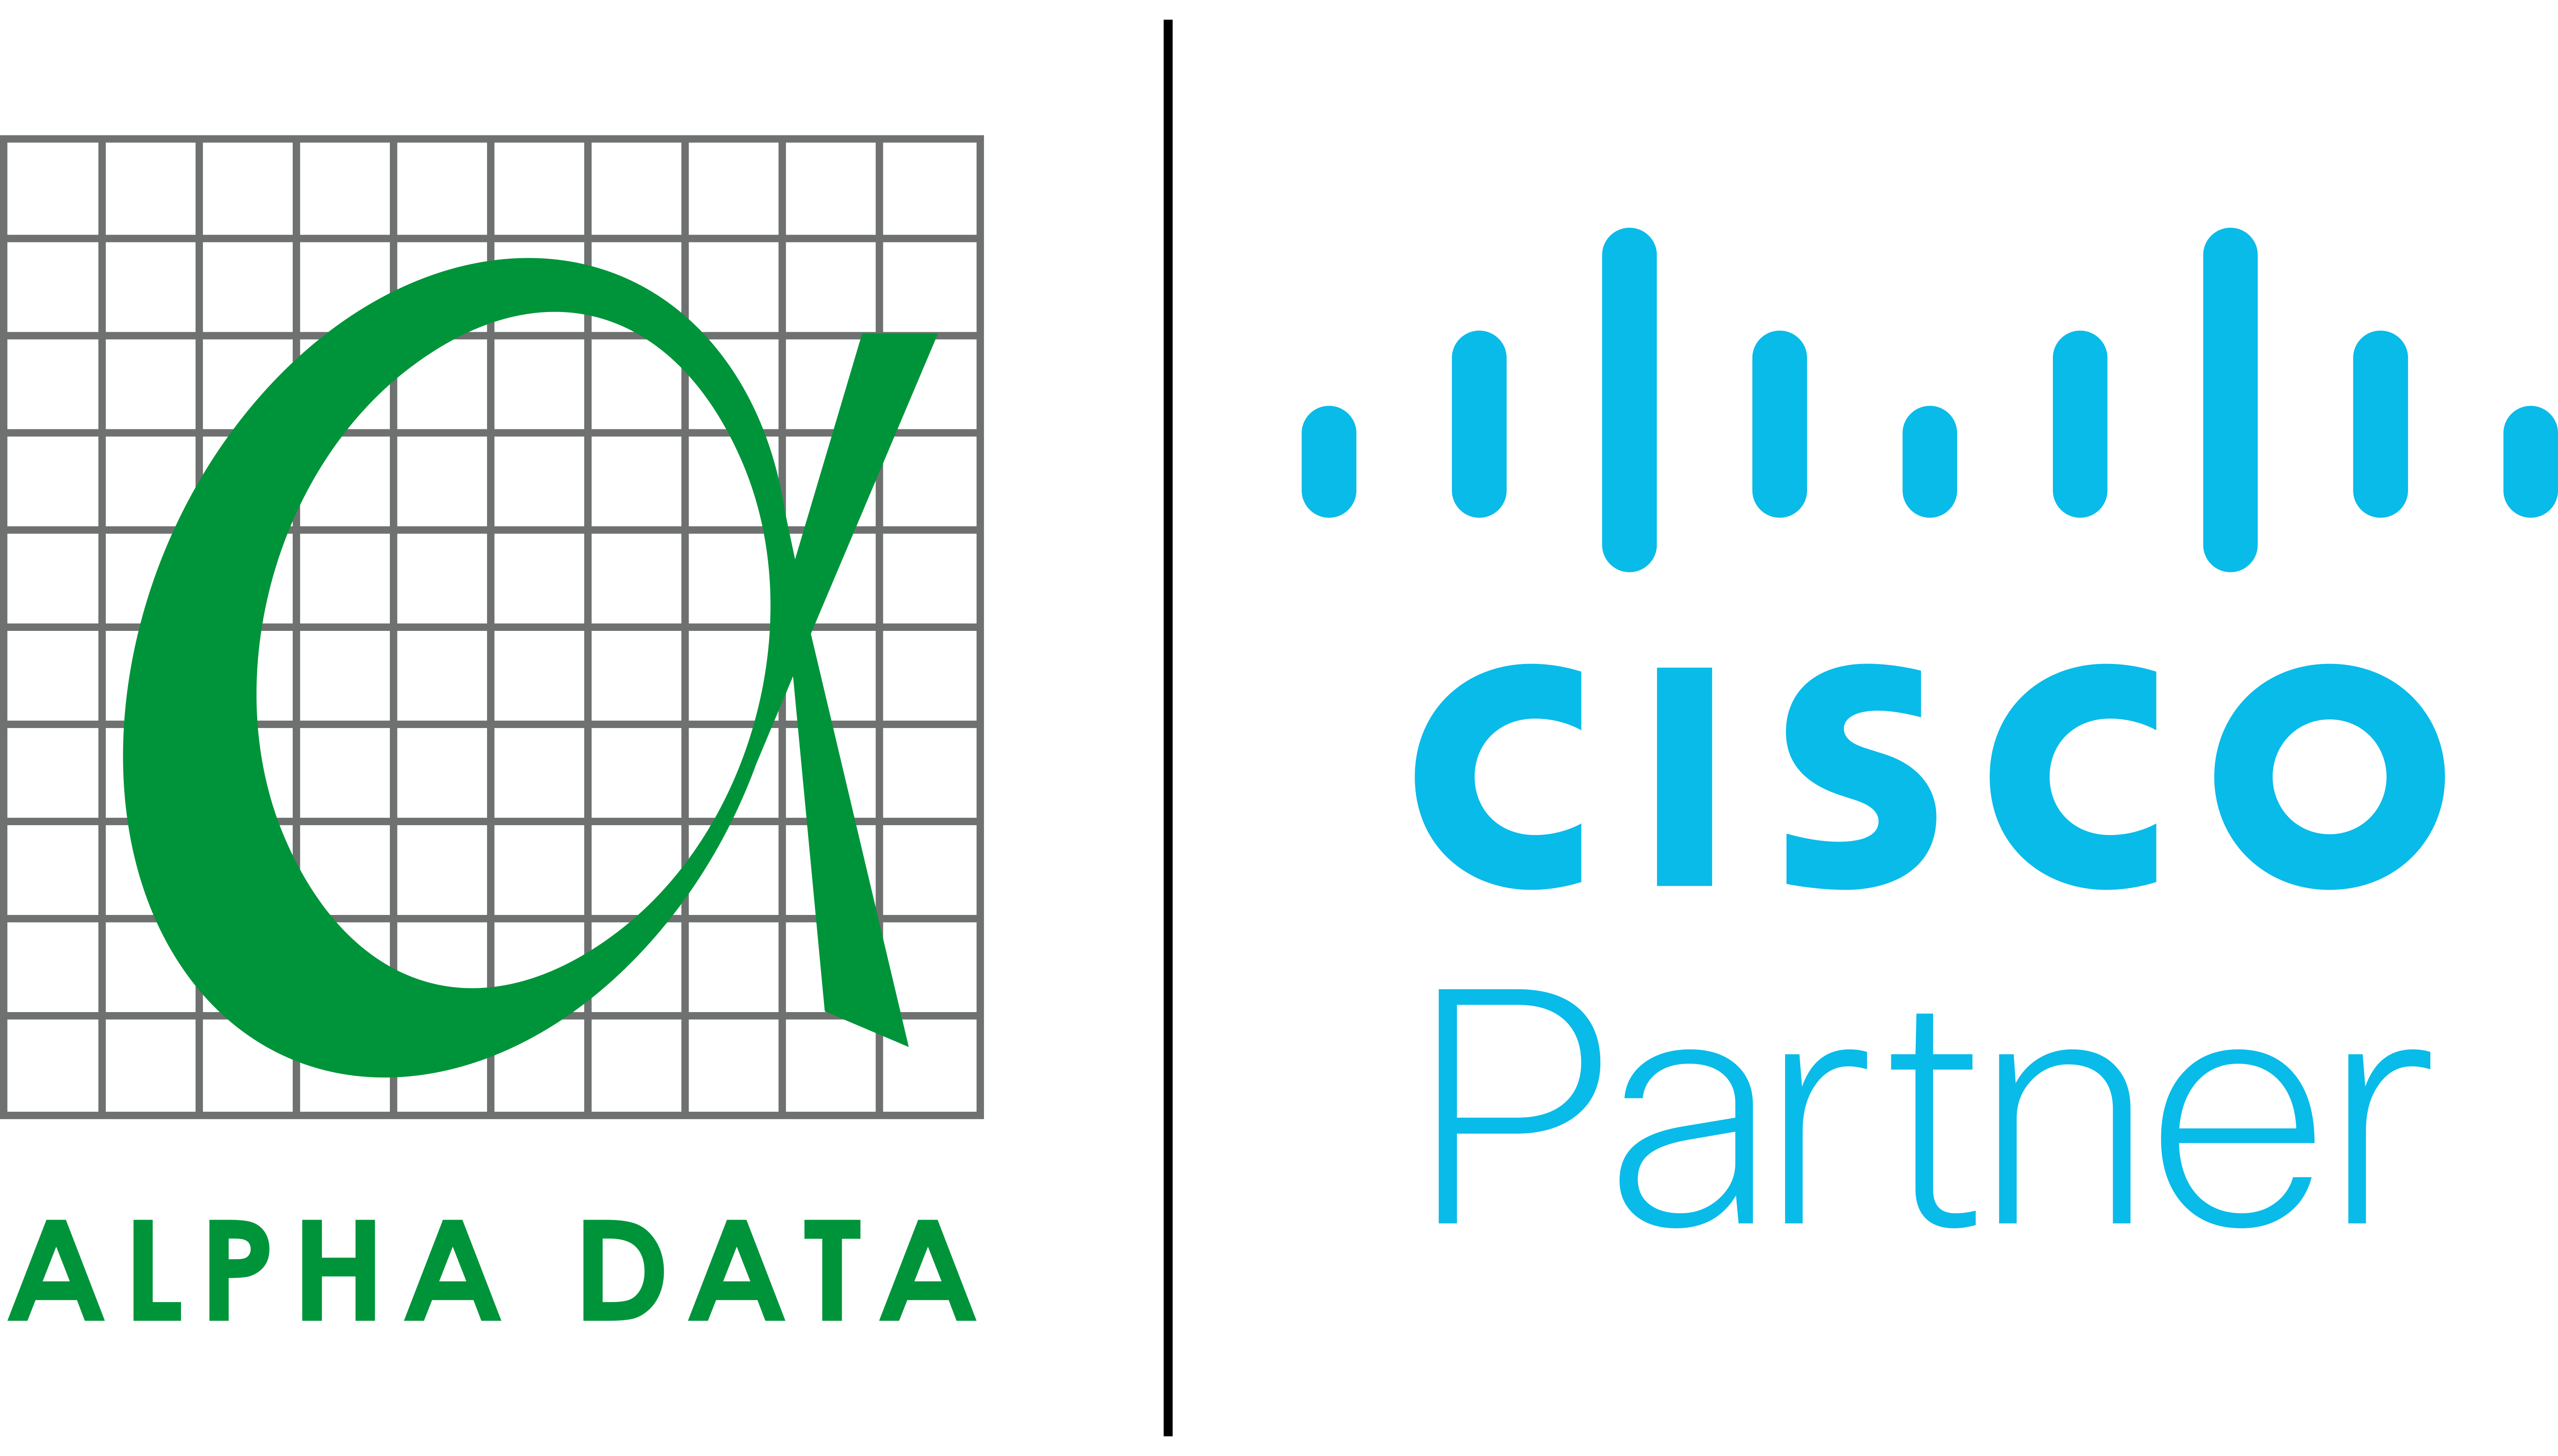 Alpha Data and Cisco Partner